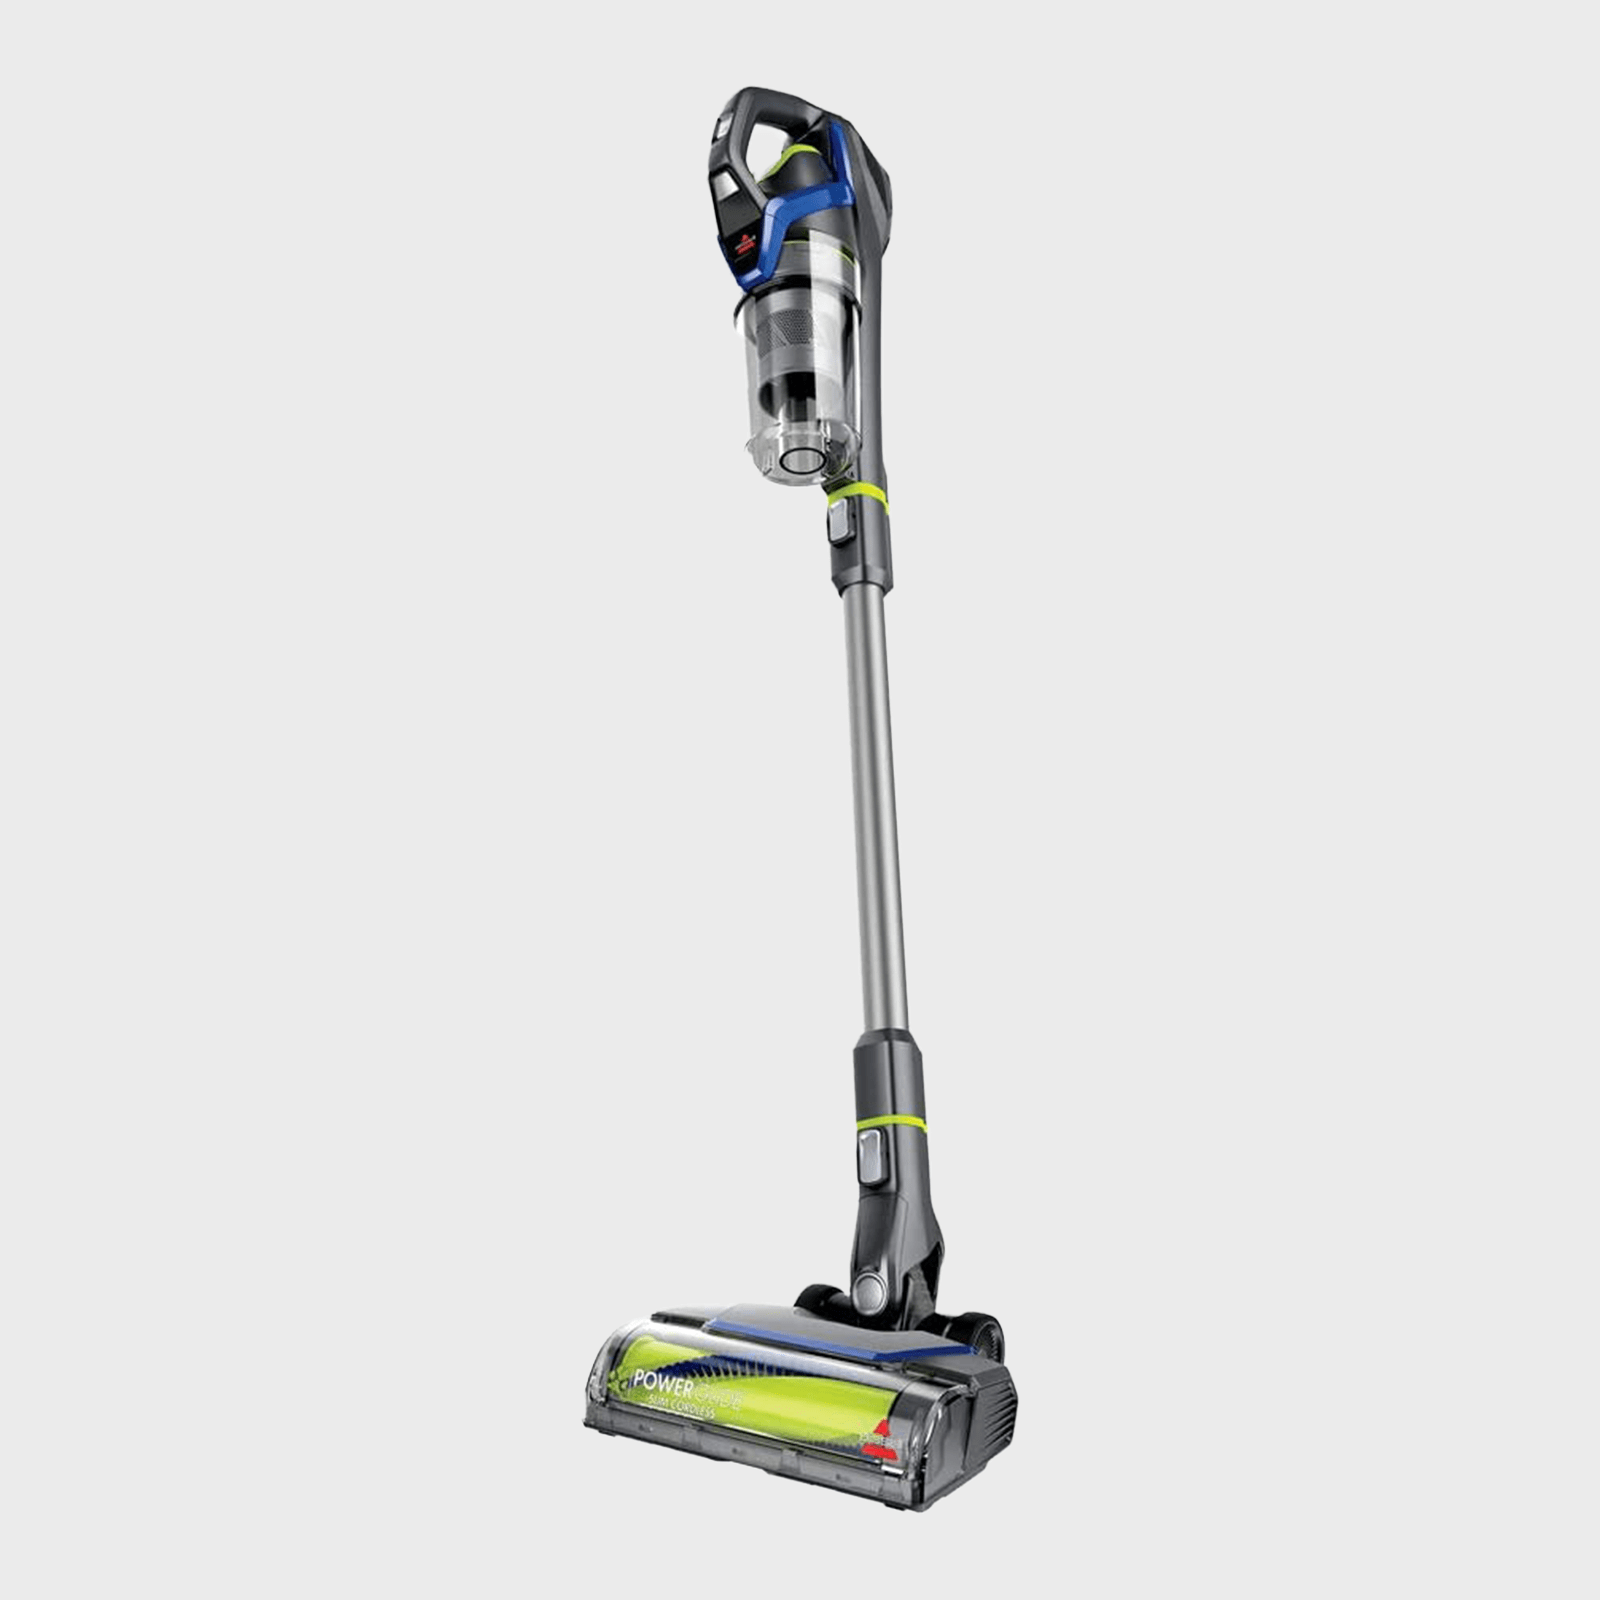 Bissell Powerglide Pet Slim Cordless Stick Vacuum